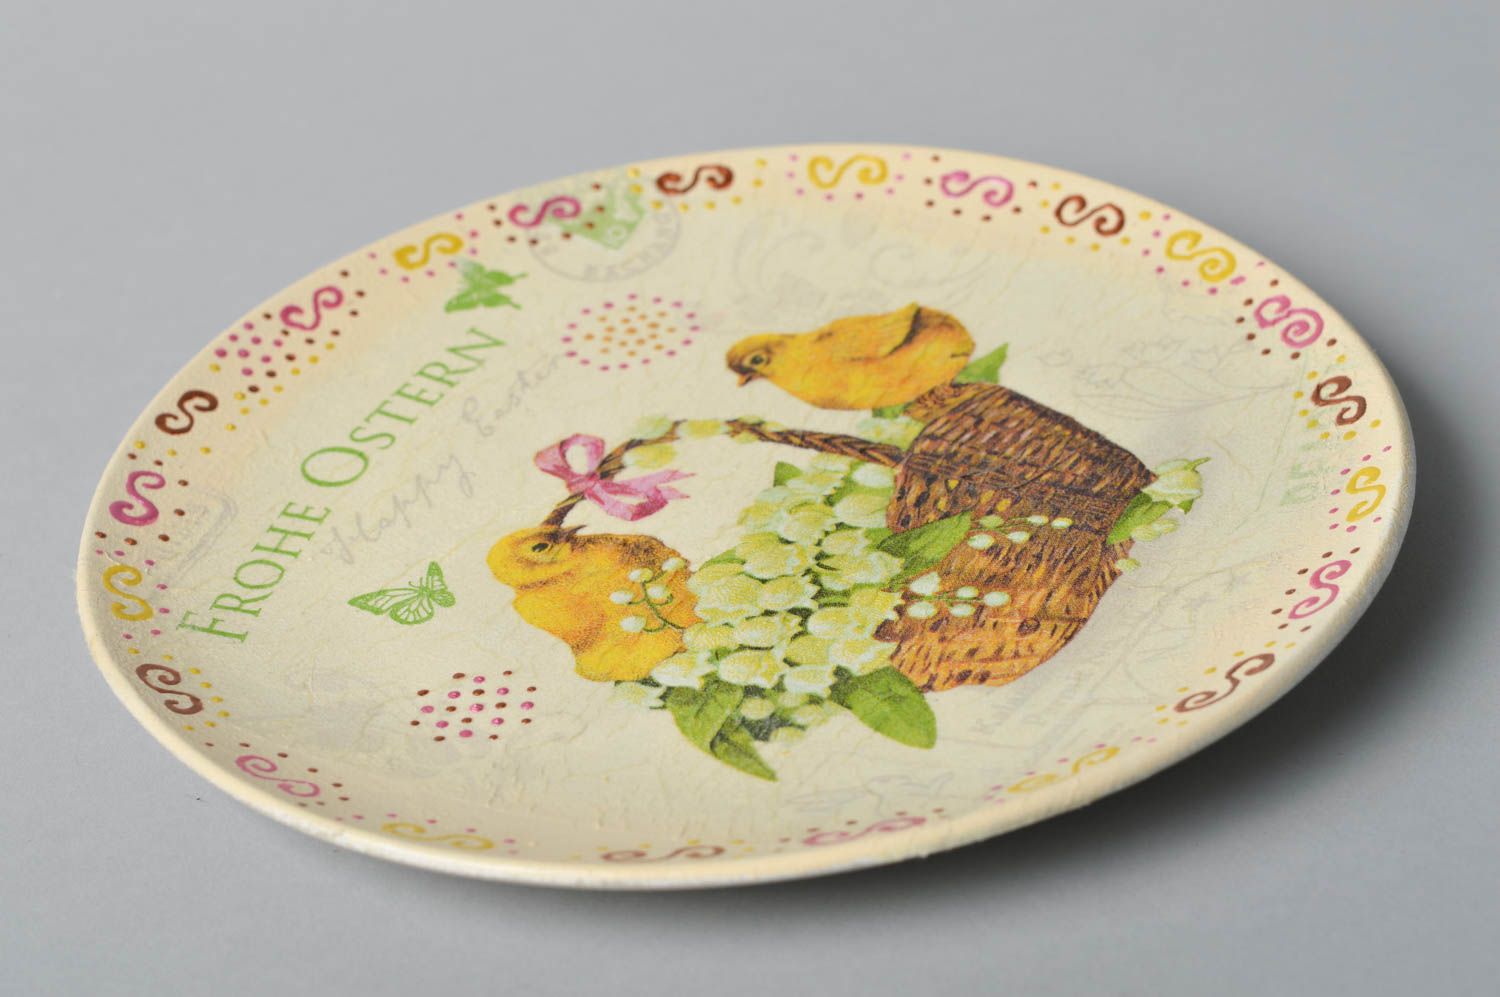 Plato de cerámica artesanal utensilio de cocina menaje del hogar decoupage foto 5